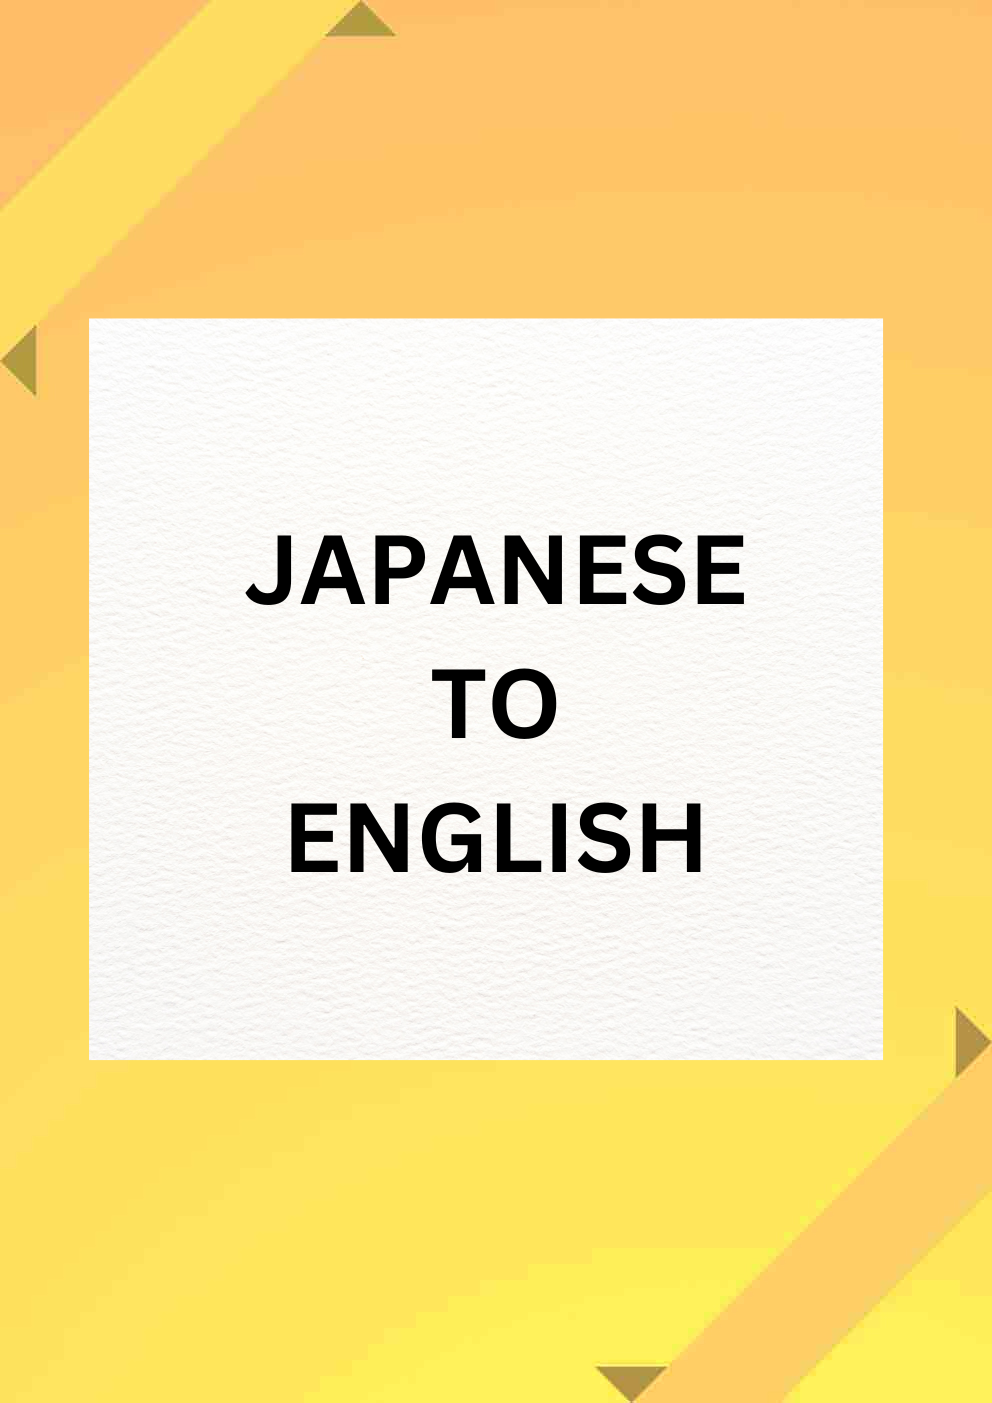 Document translation japanese to english [Birth Marriage Degree]